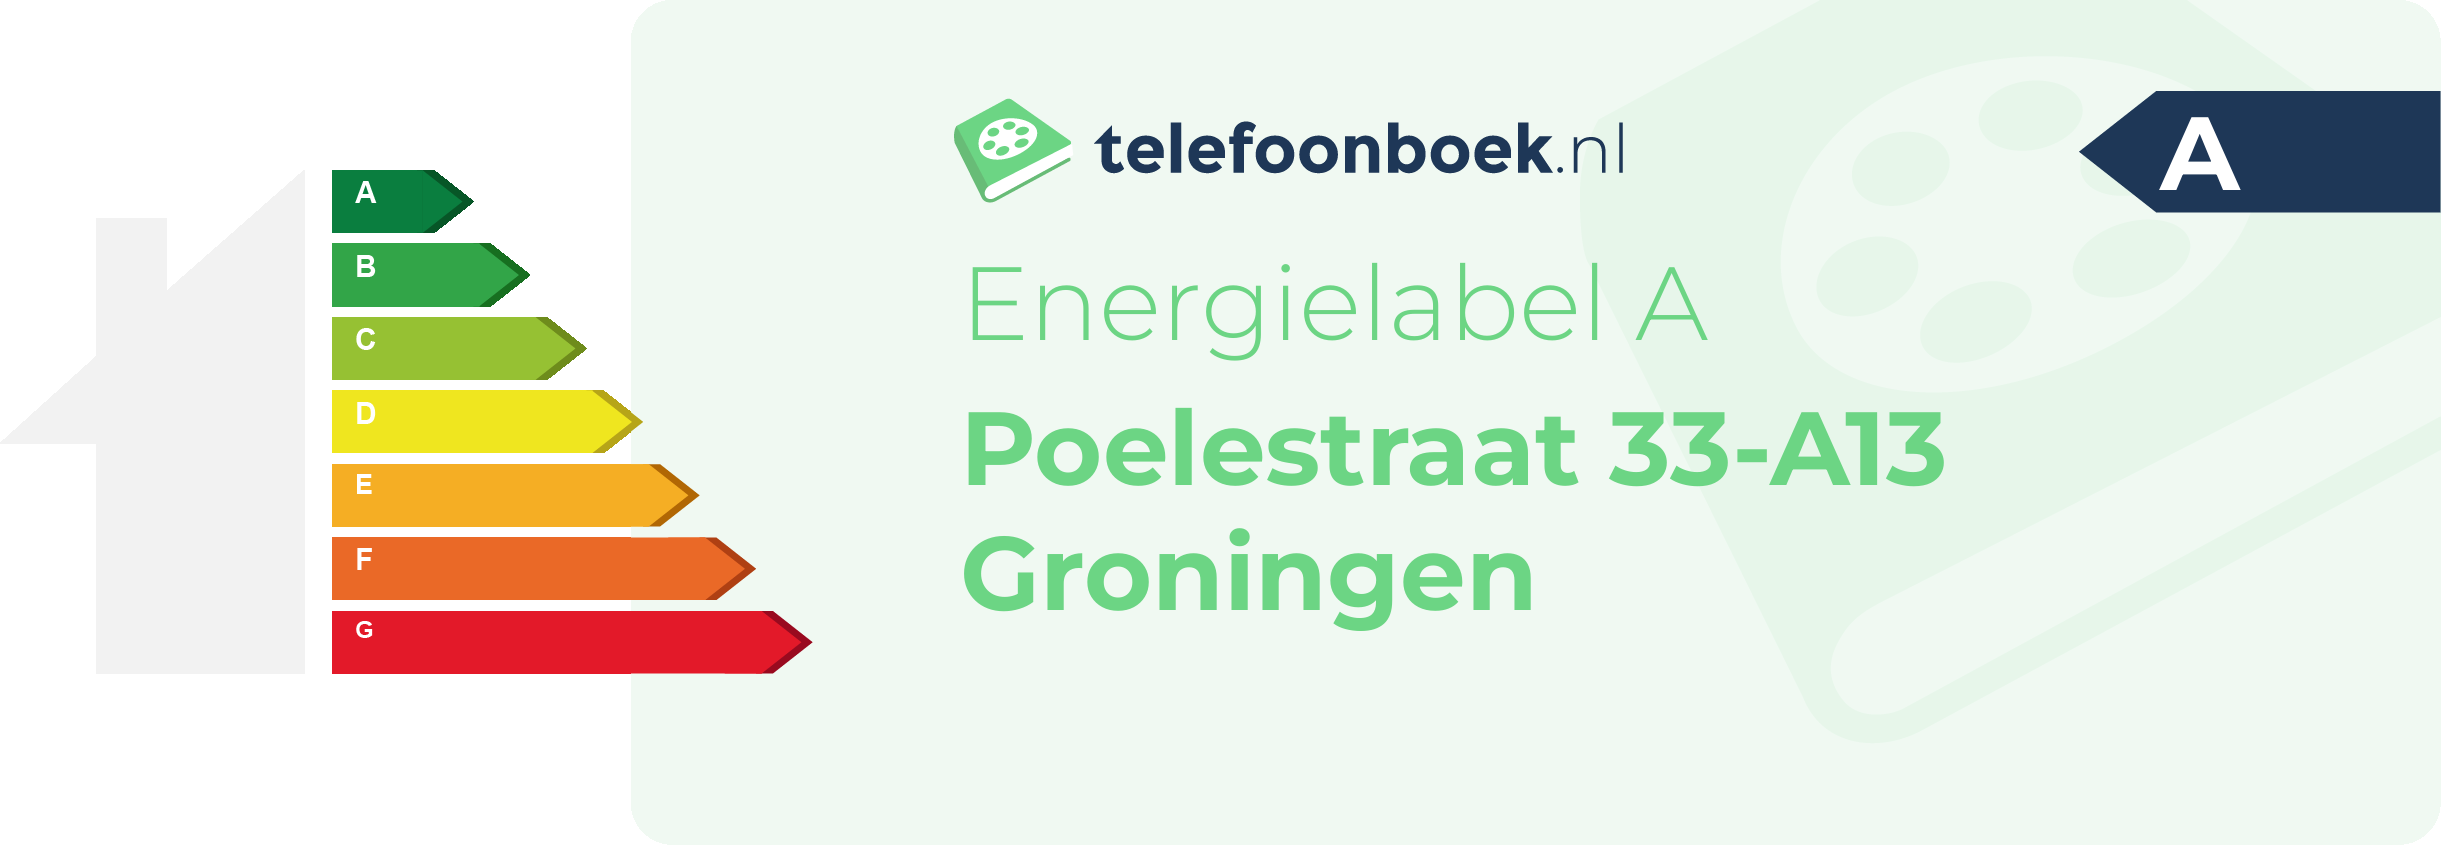 Energielabel Poelestraat 33-A13 Groningen